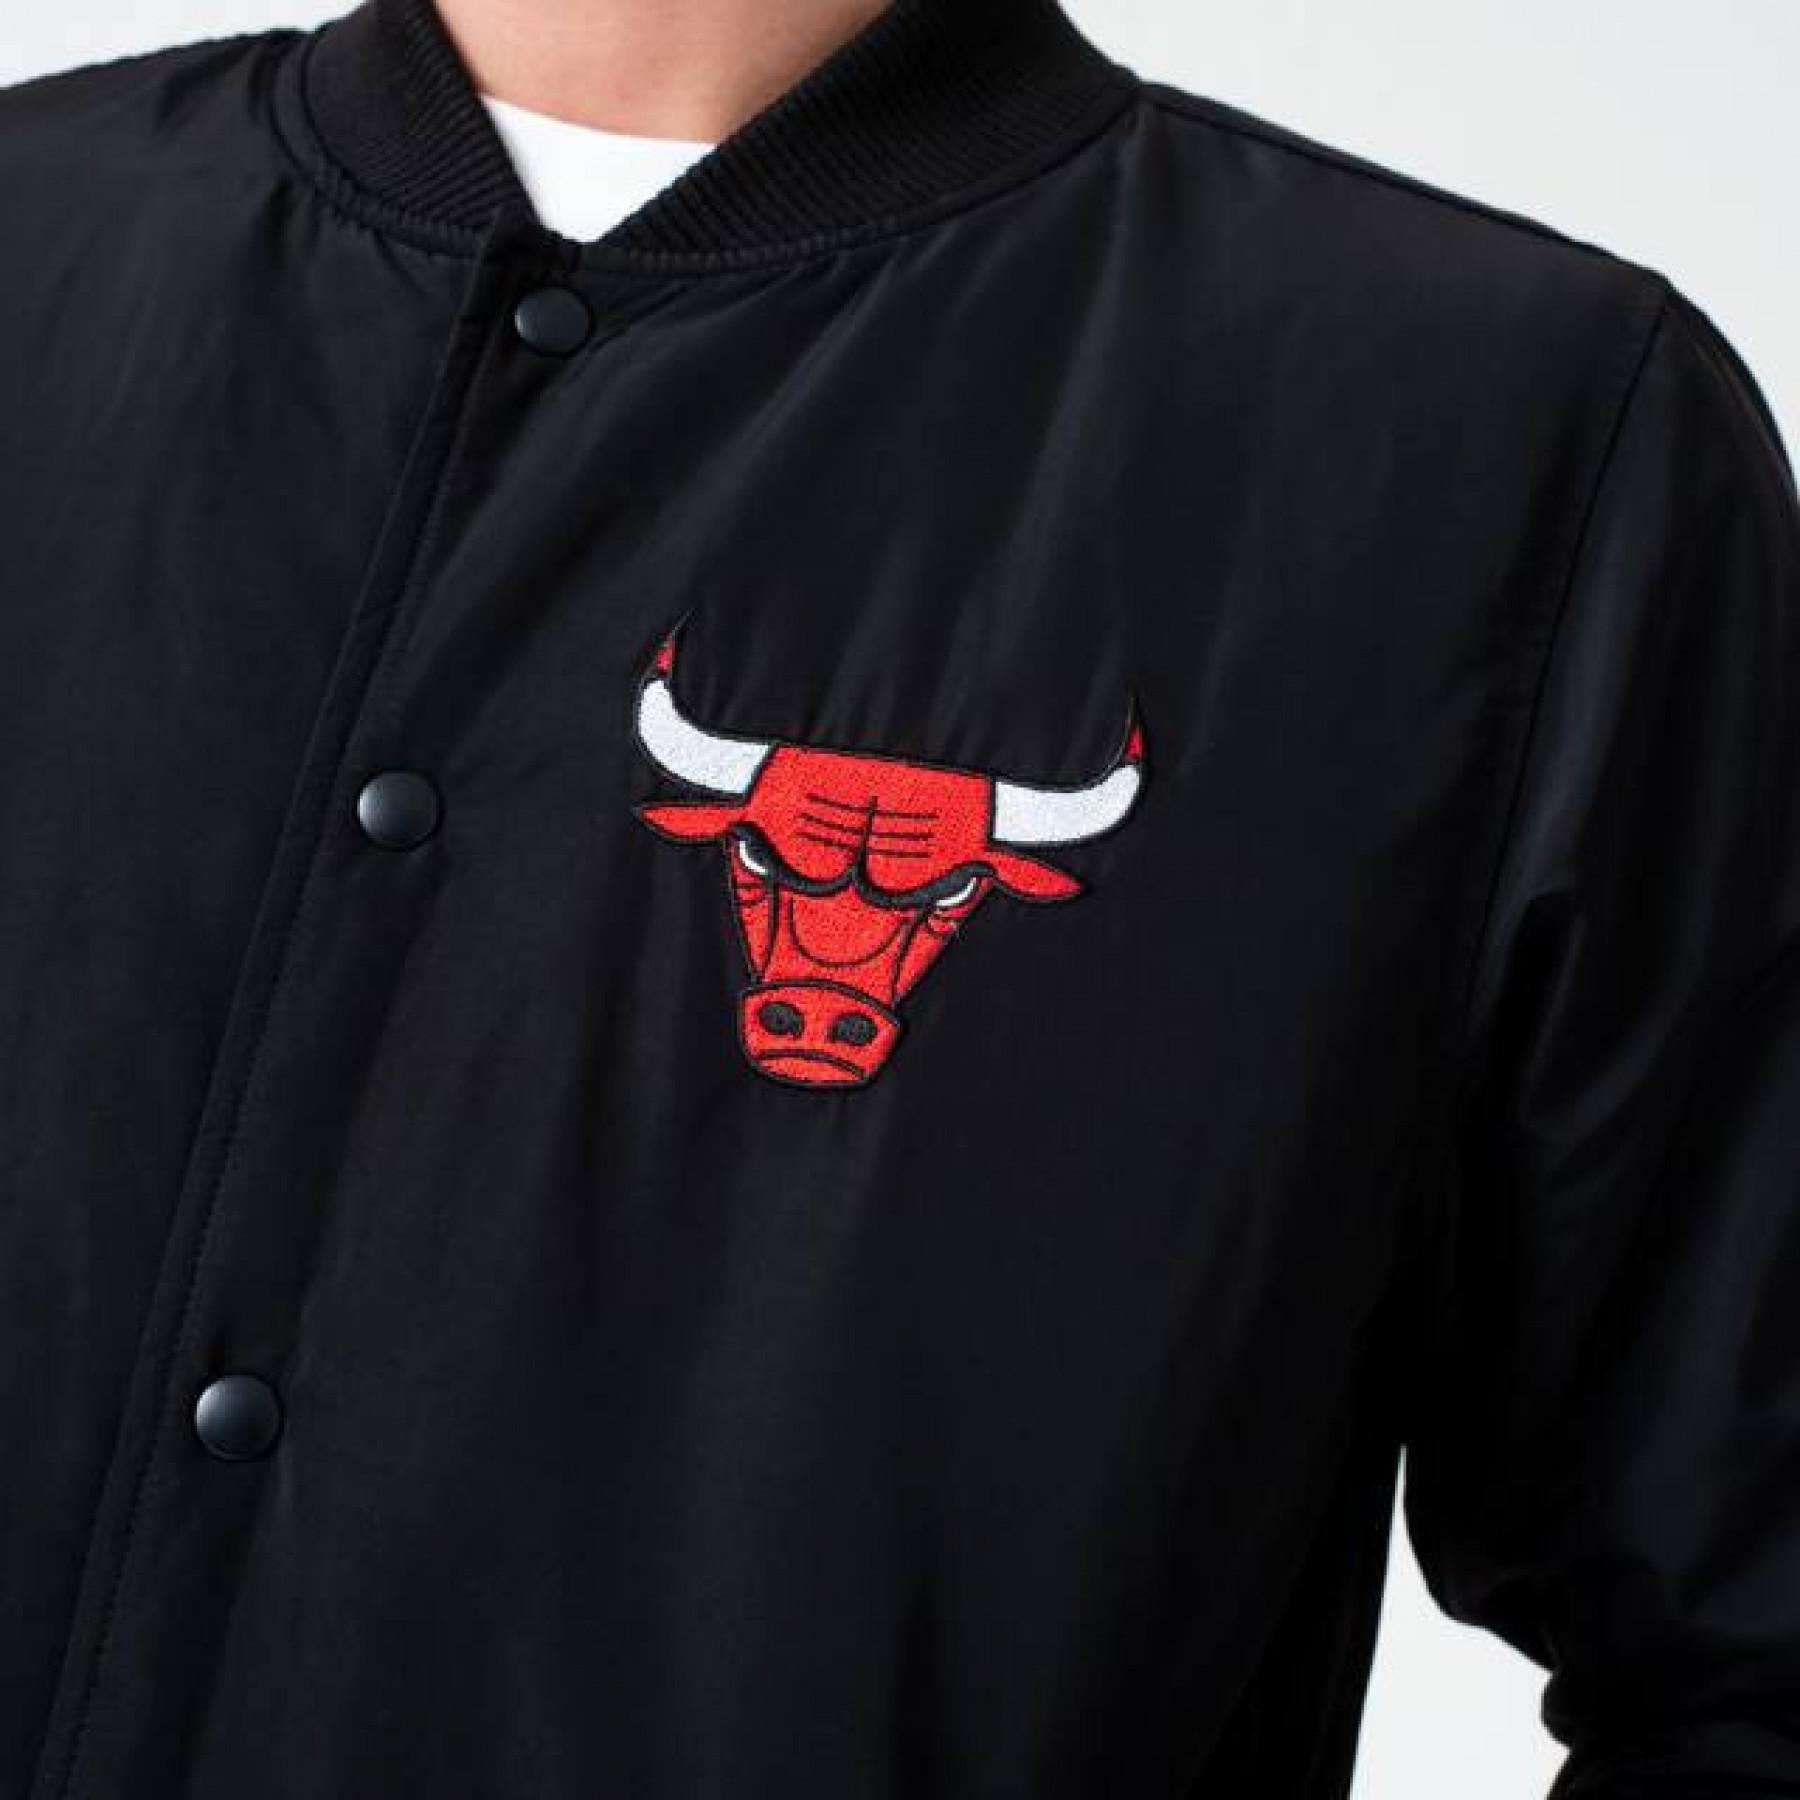 Jacka New Era NBA Team Logo Chicago Bulls